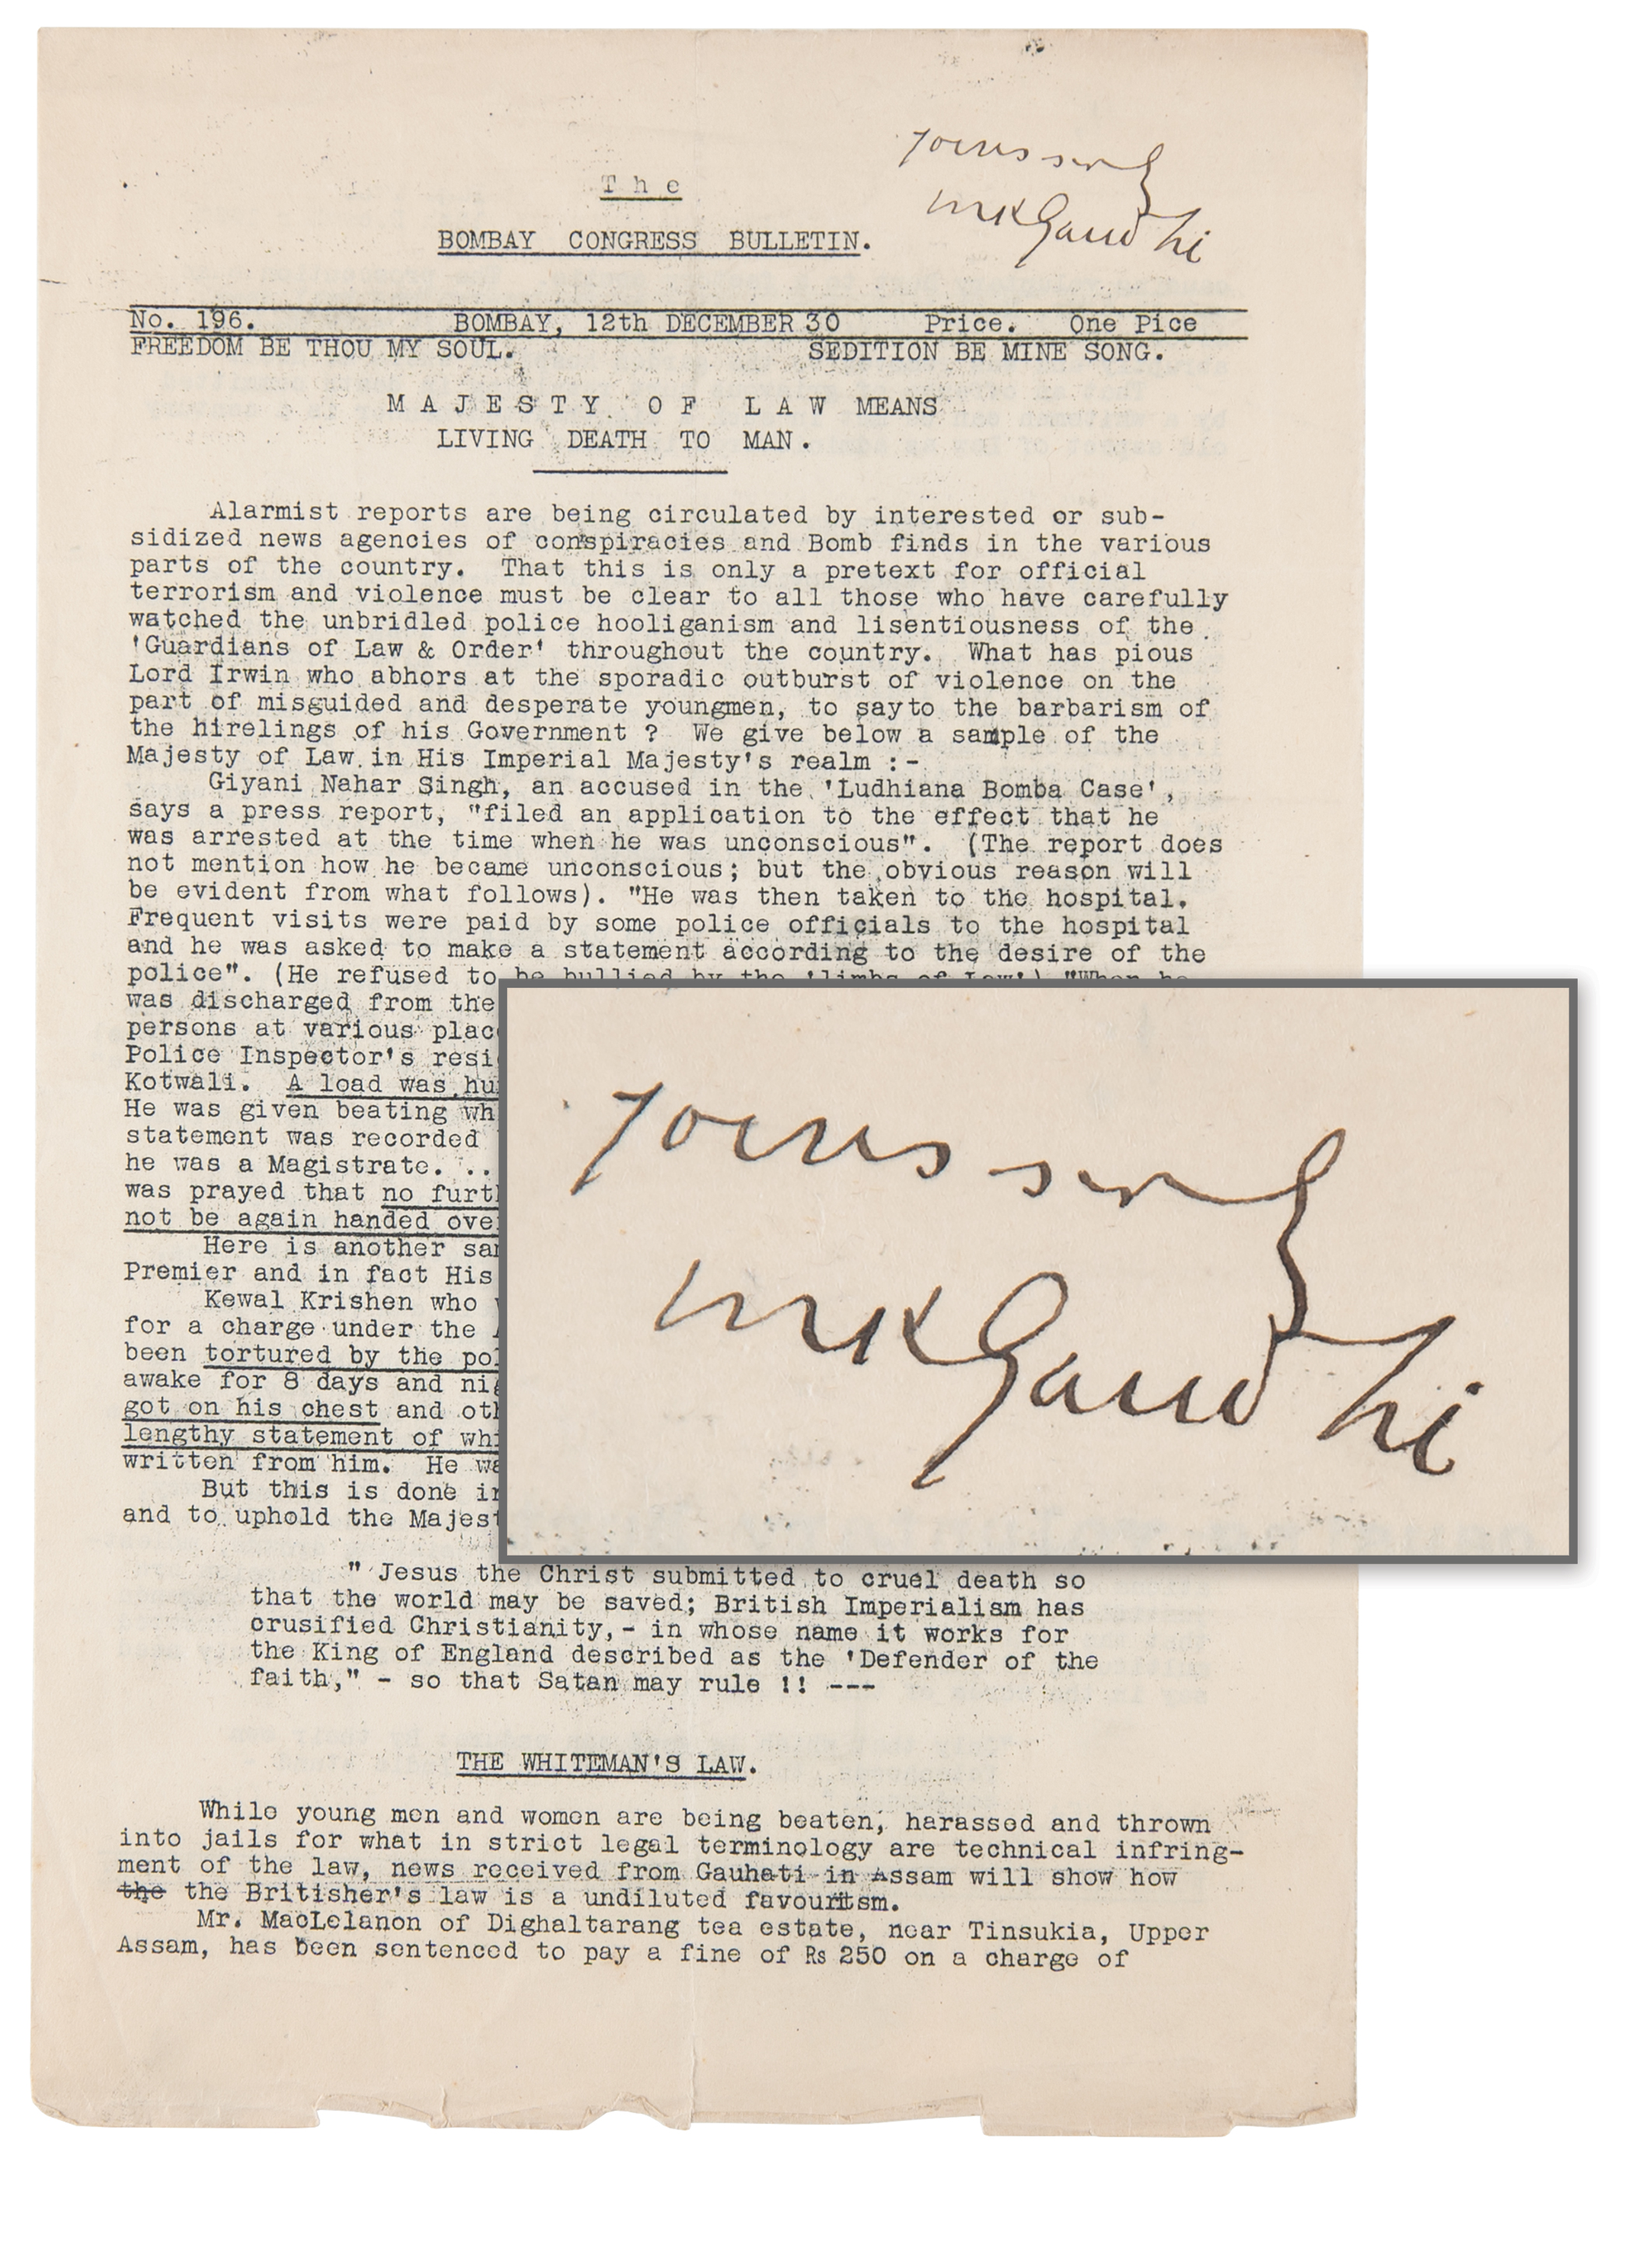 Lot #82 Mohandas Gandhi Signed 'Bombay Congress Bulletin' Circular (1930) - Image 1